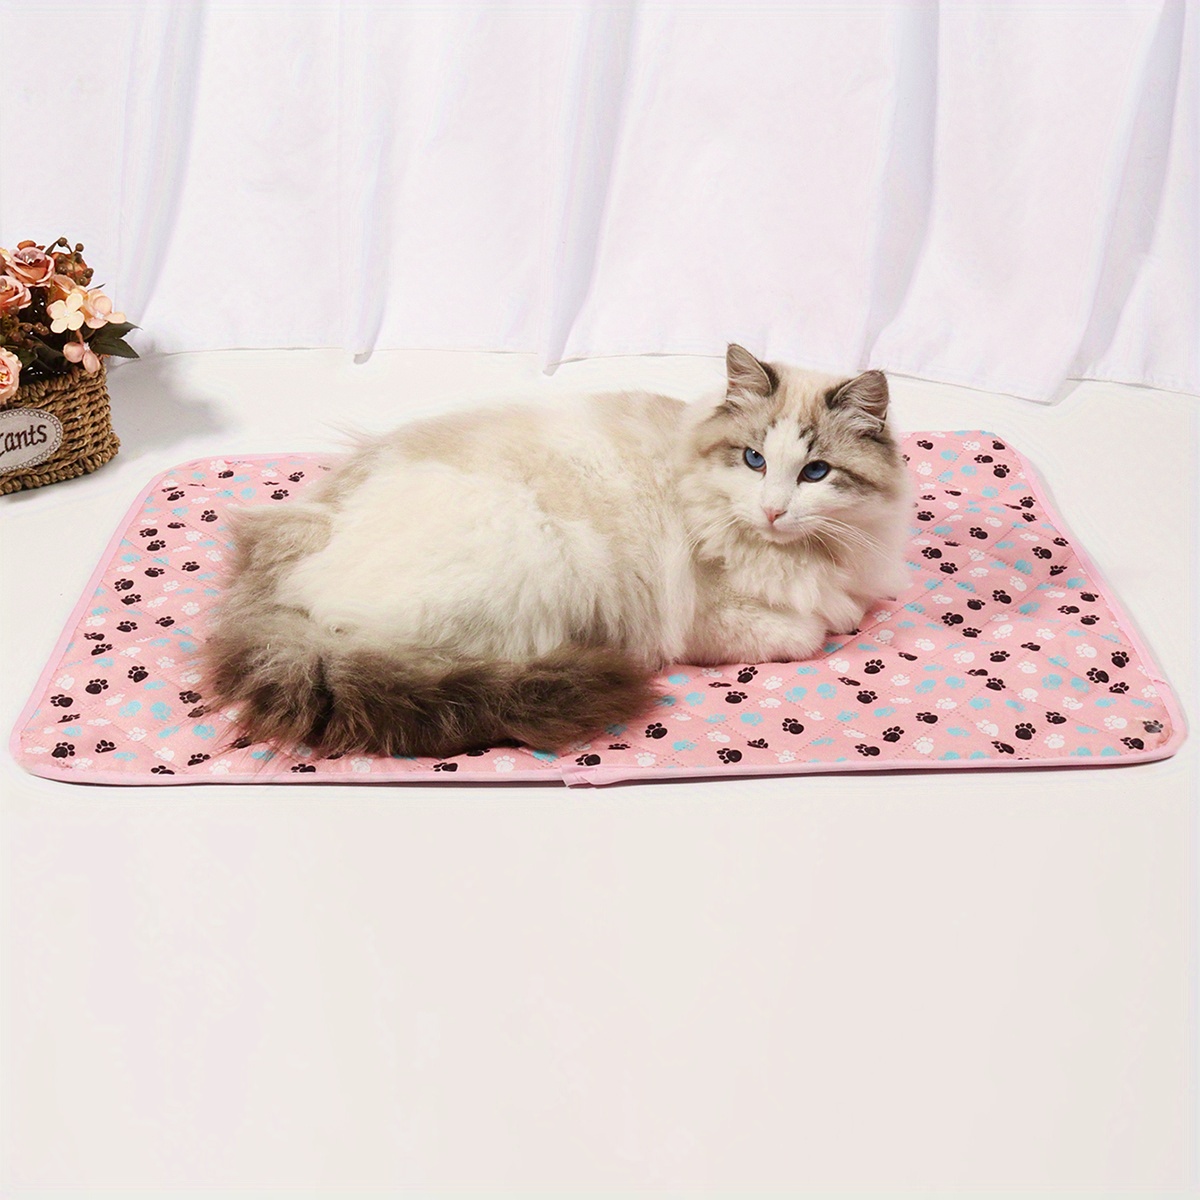 pet comfortable cooling mat with cute patterns cat and dog sleeping mat pet beds sofa cushion details 4